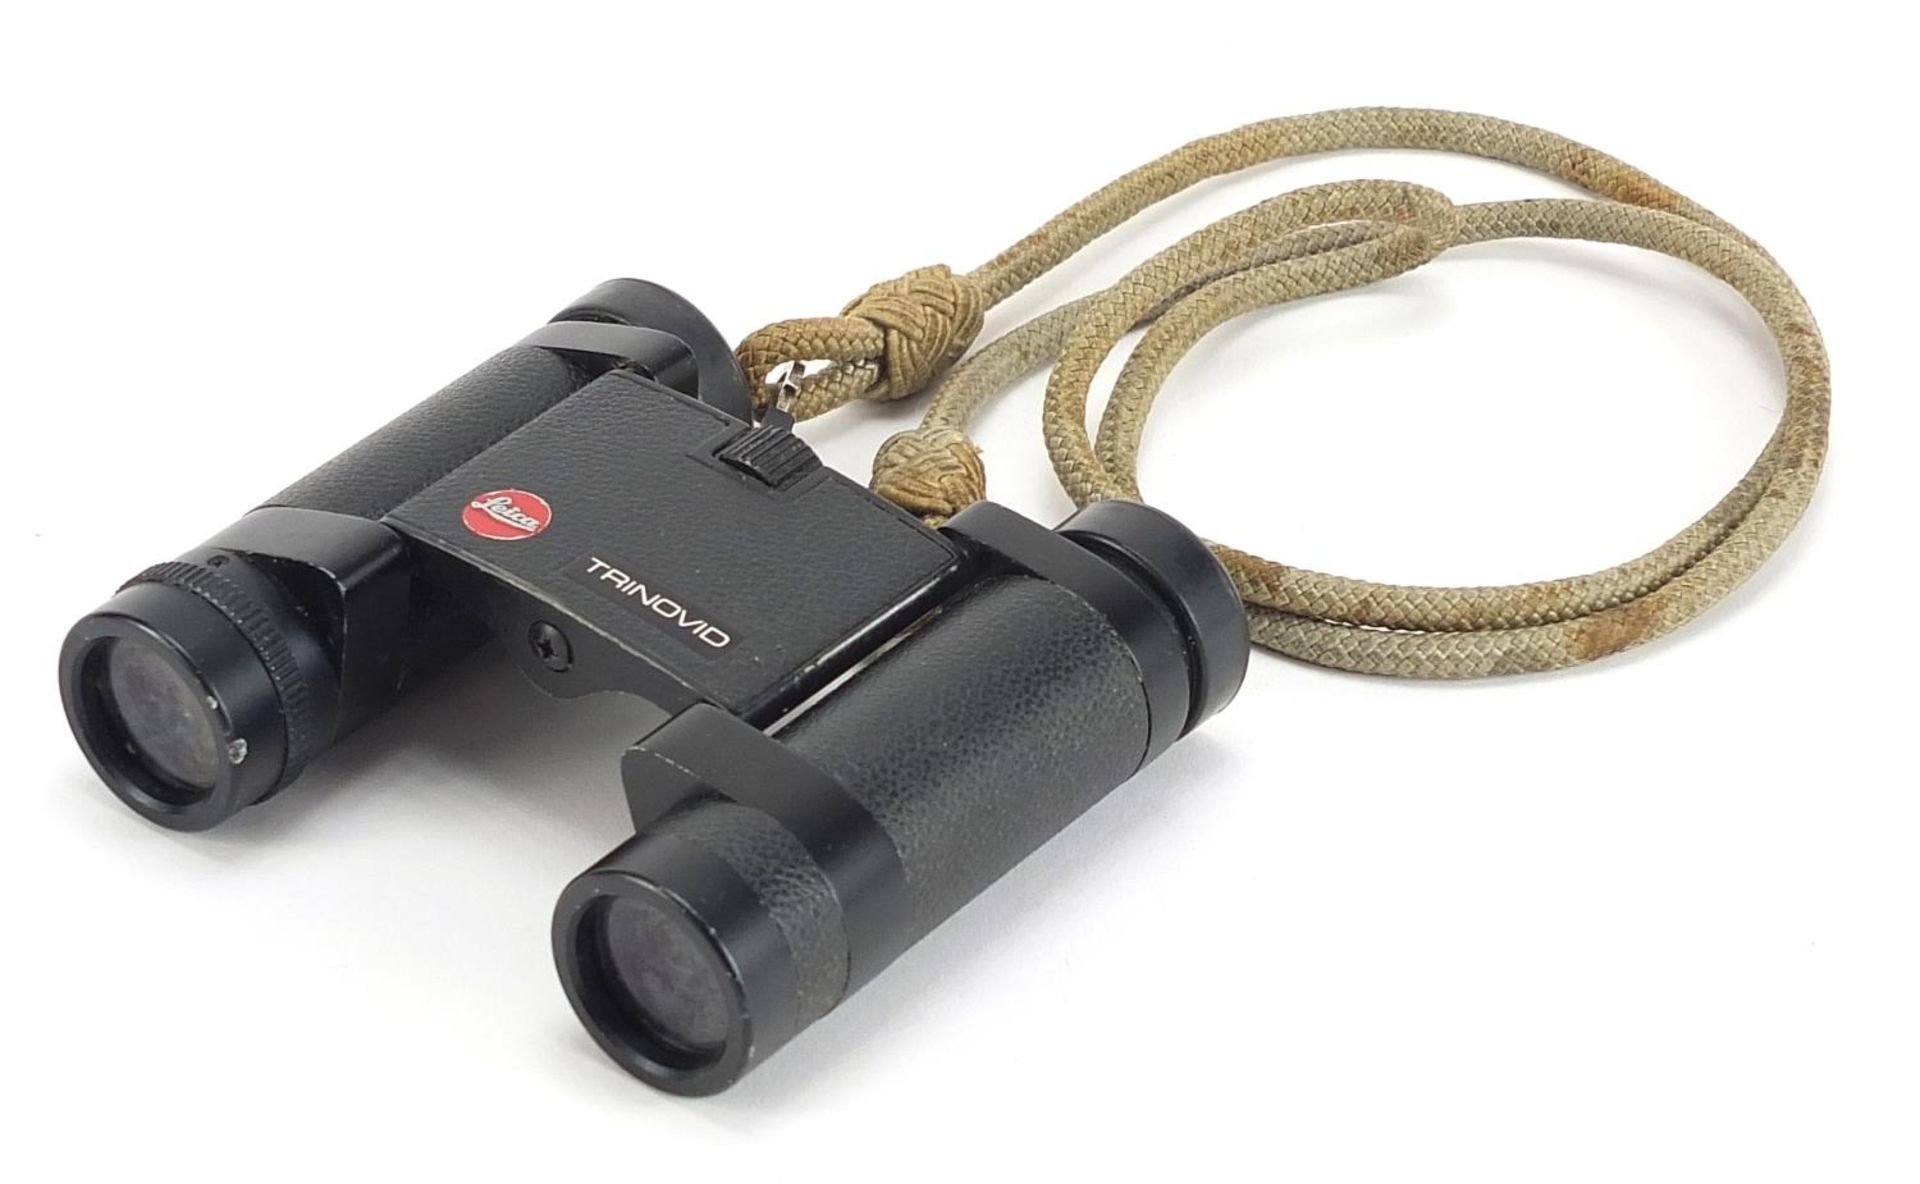 Pair of Leica Trinovid binoculars, 9cm in length